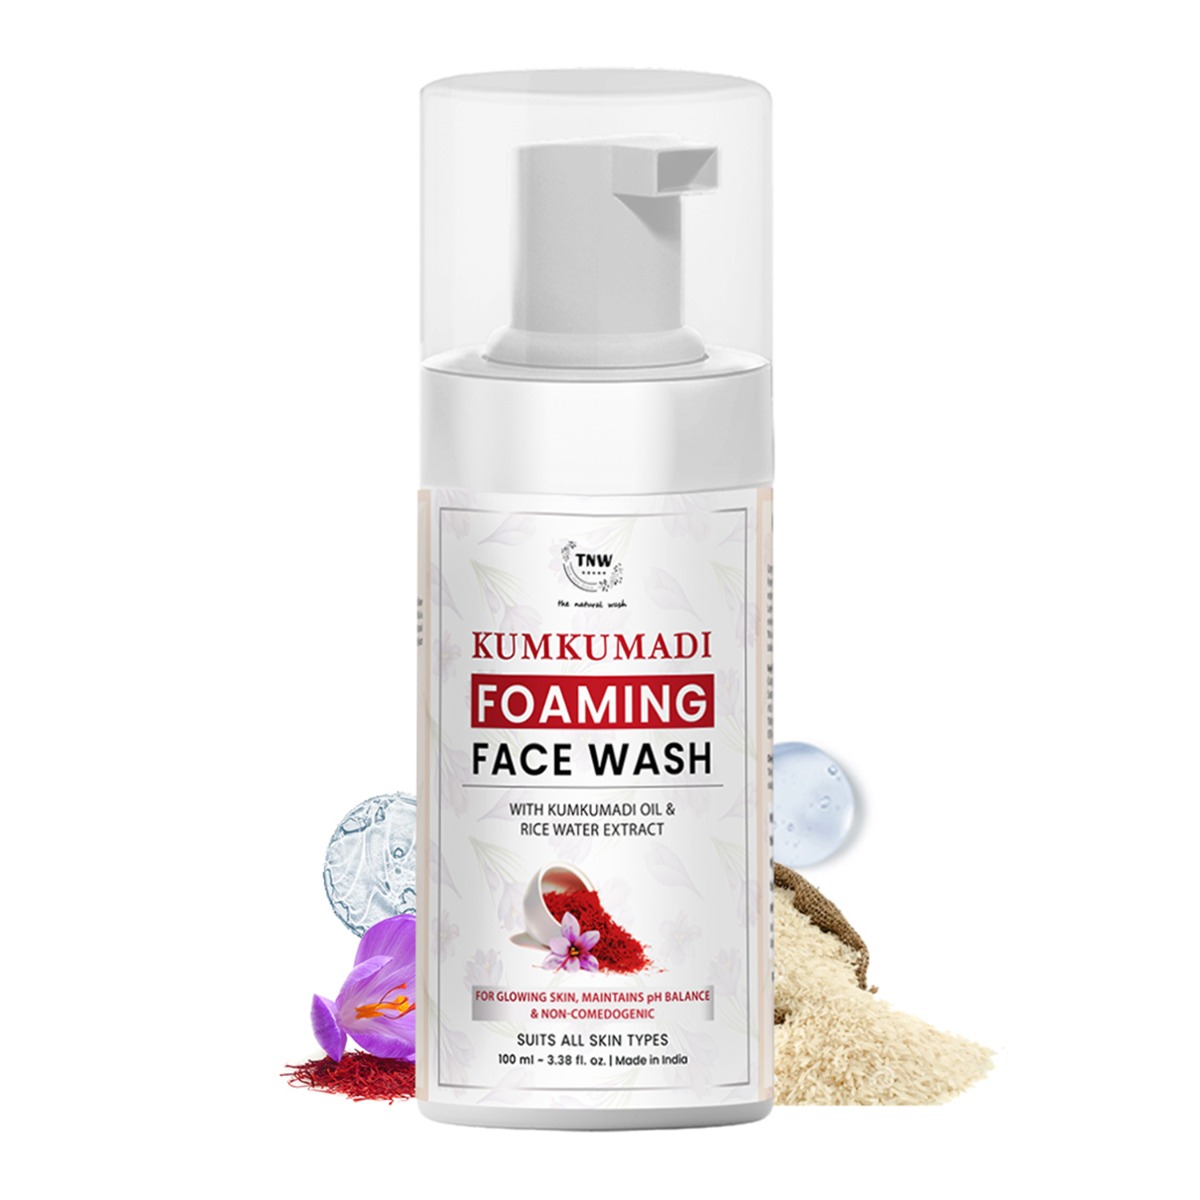 TNW - The Natural Wash Kumkumadi Foaming Face Wash For Glowing Skin, 100ml